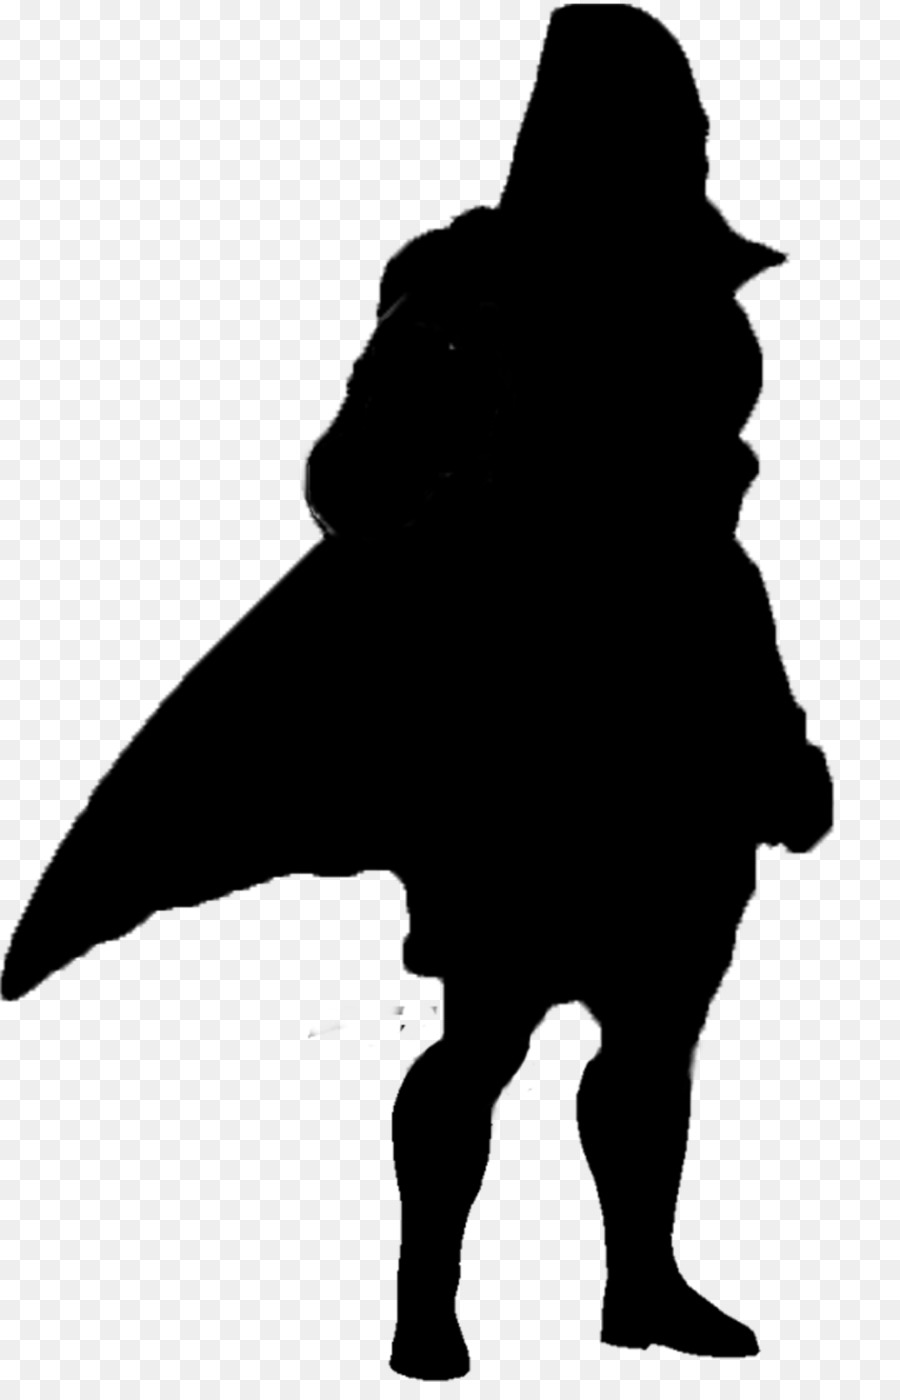 Man Silhouette Black Job Clip art -  png download - 1000*1535 - Free Transparent Man png Download.